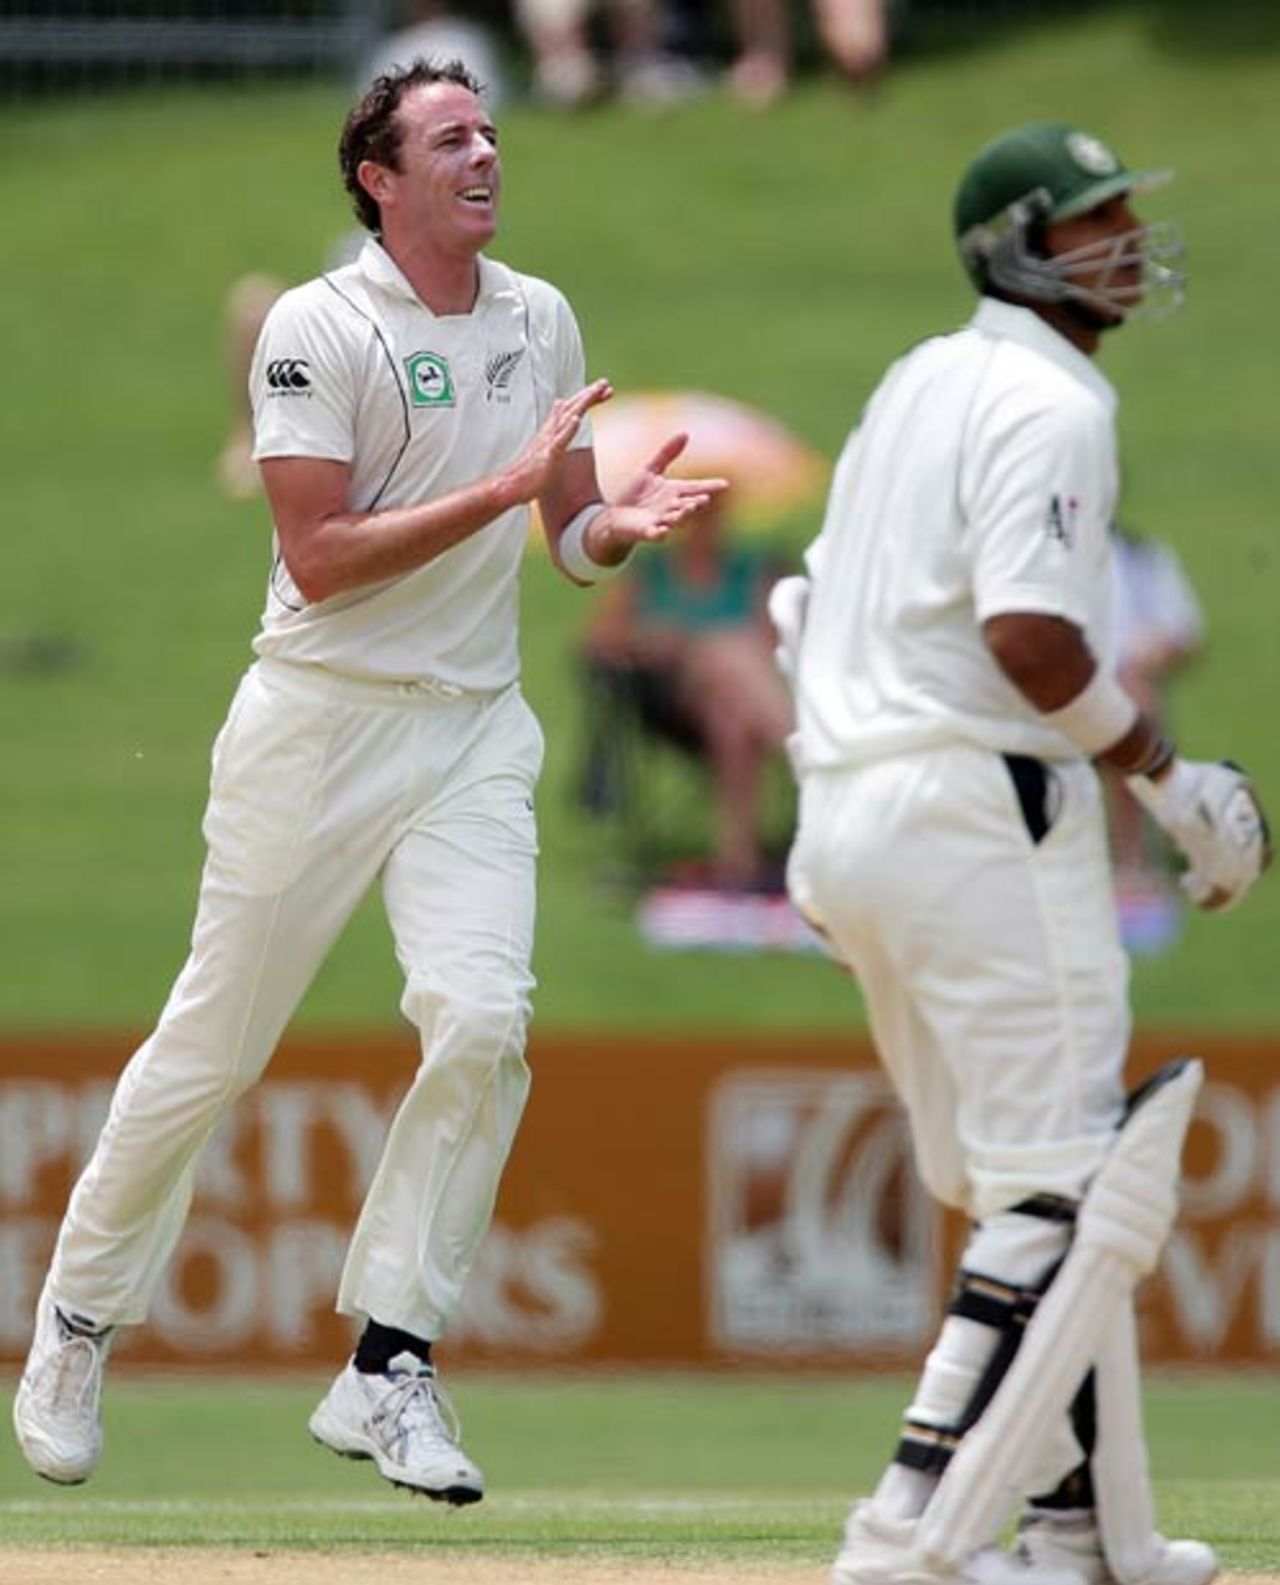 Iain O'Brien celebrates the wicket of Faisal Iqbal, New Zealand v Pakistan, 3rd Test, Napier, 1st day, December 11, 2009